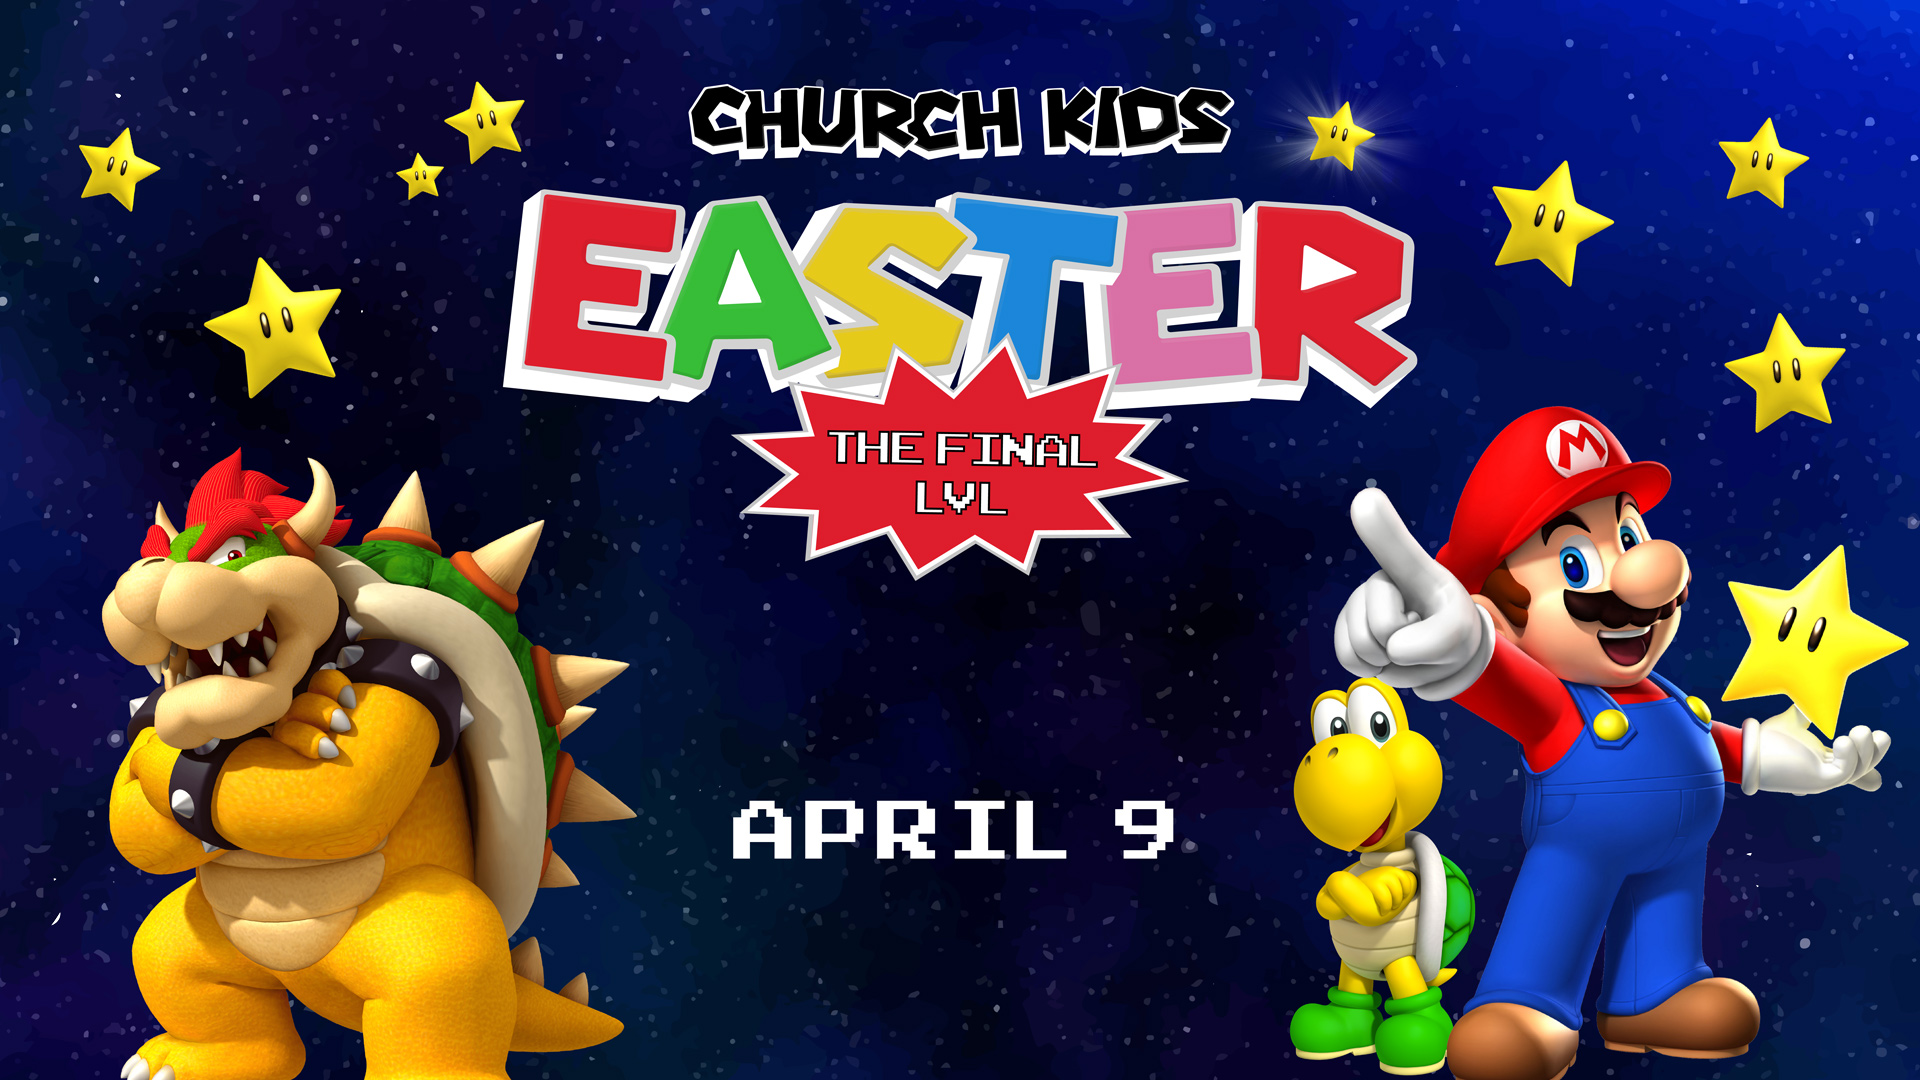 Church Kids Easter